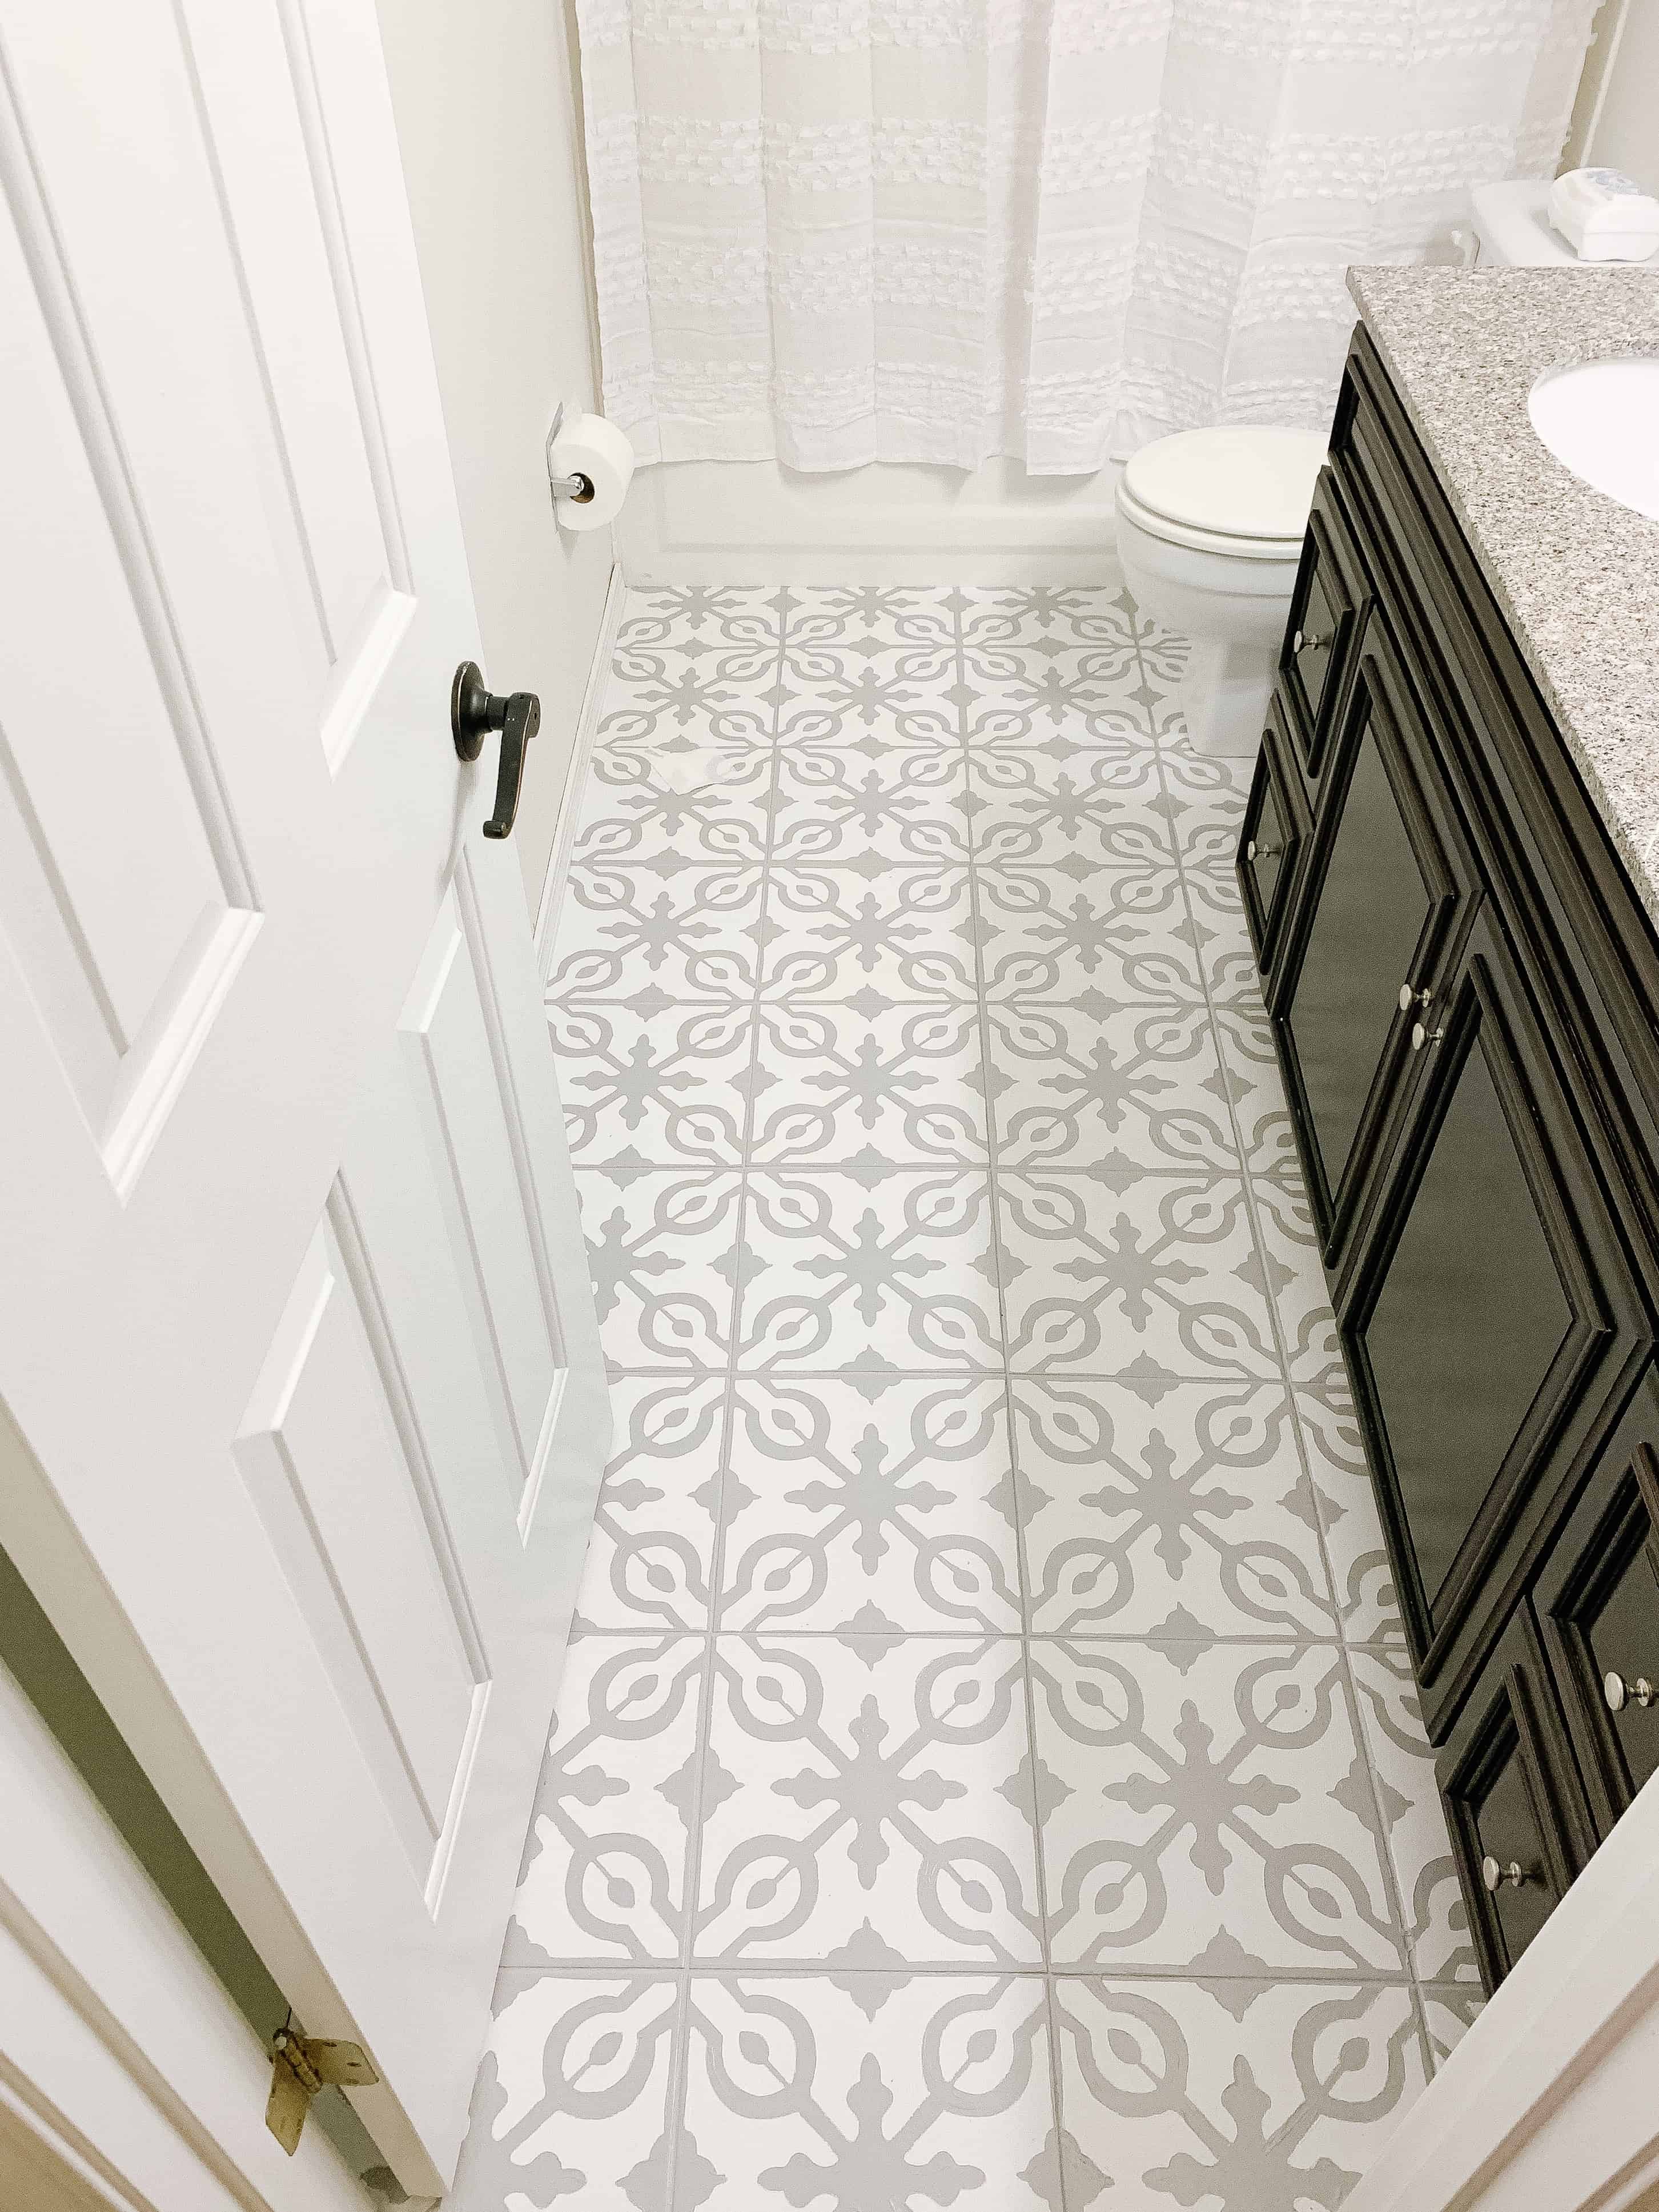 How To Paint Tile Floors, Painted Bathroom Tile